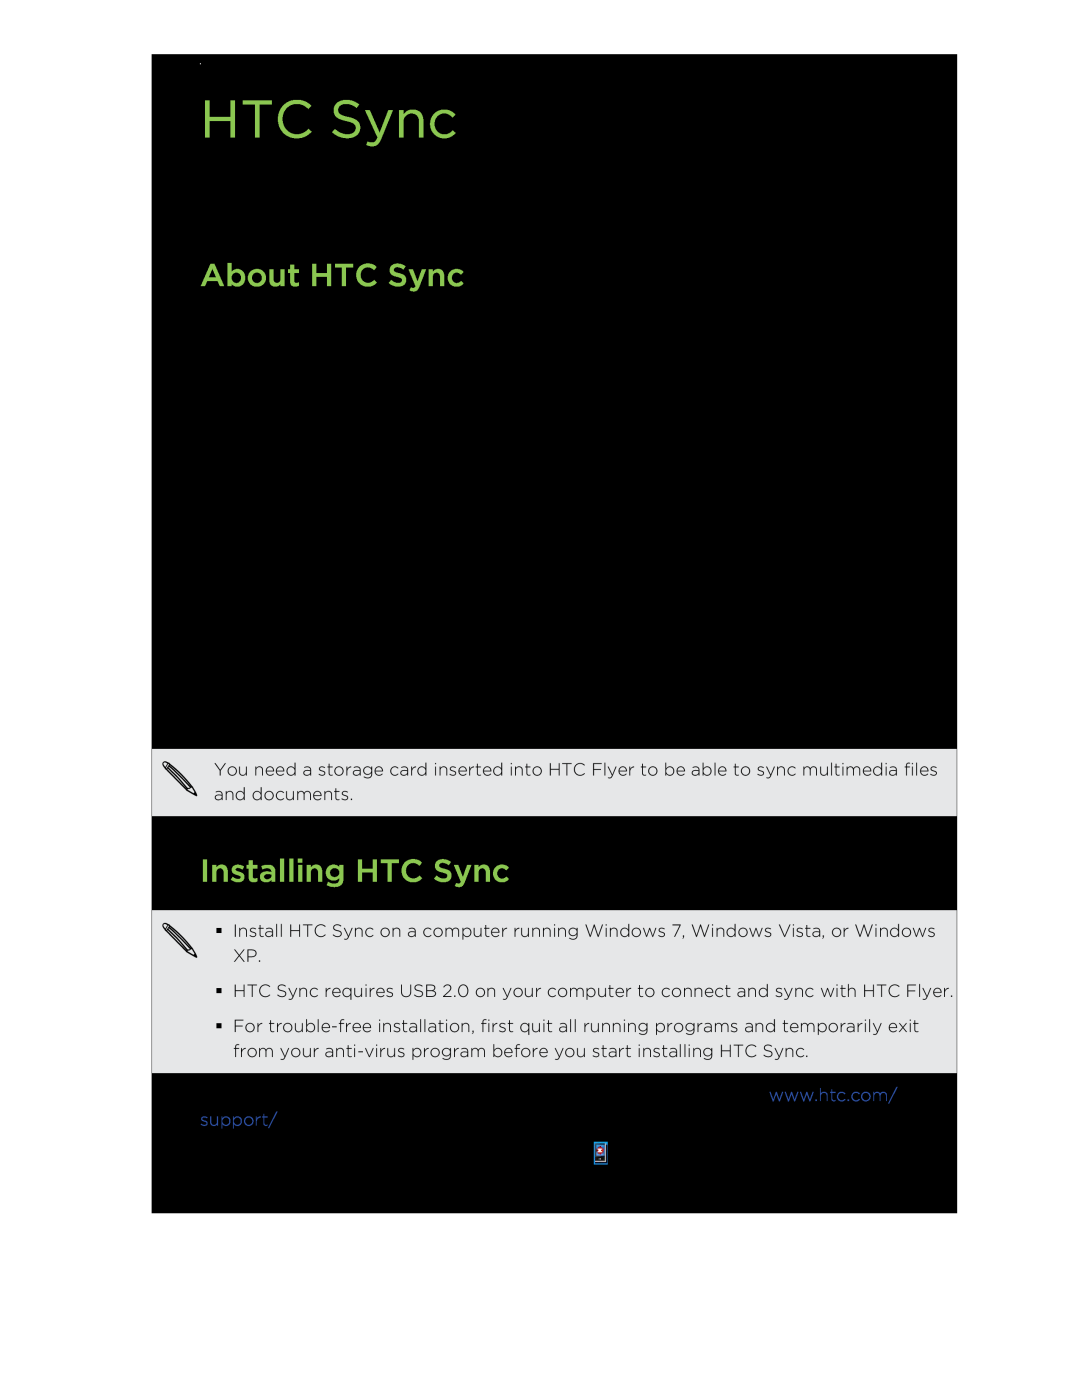 HTC HTCFlyerP512 manual About HTC Sync, Installing HTC Sync 